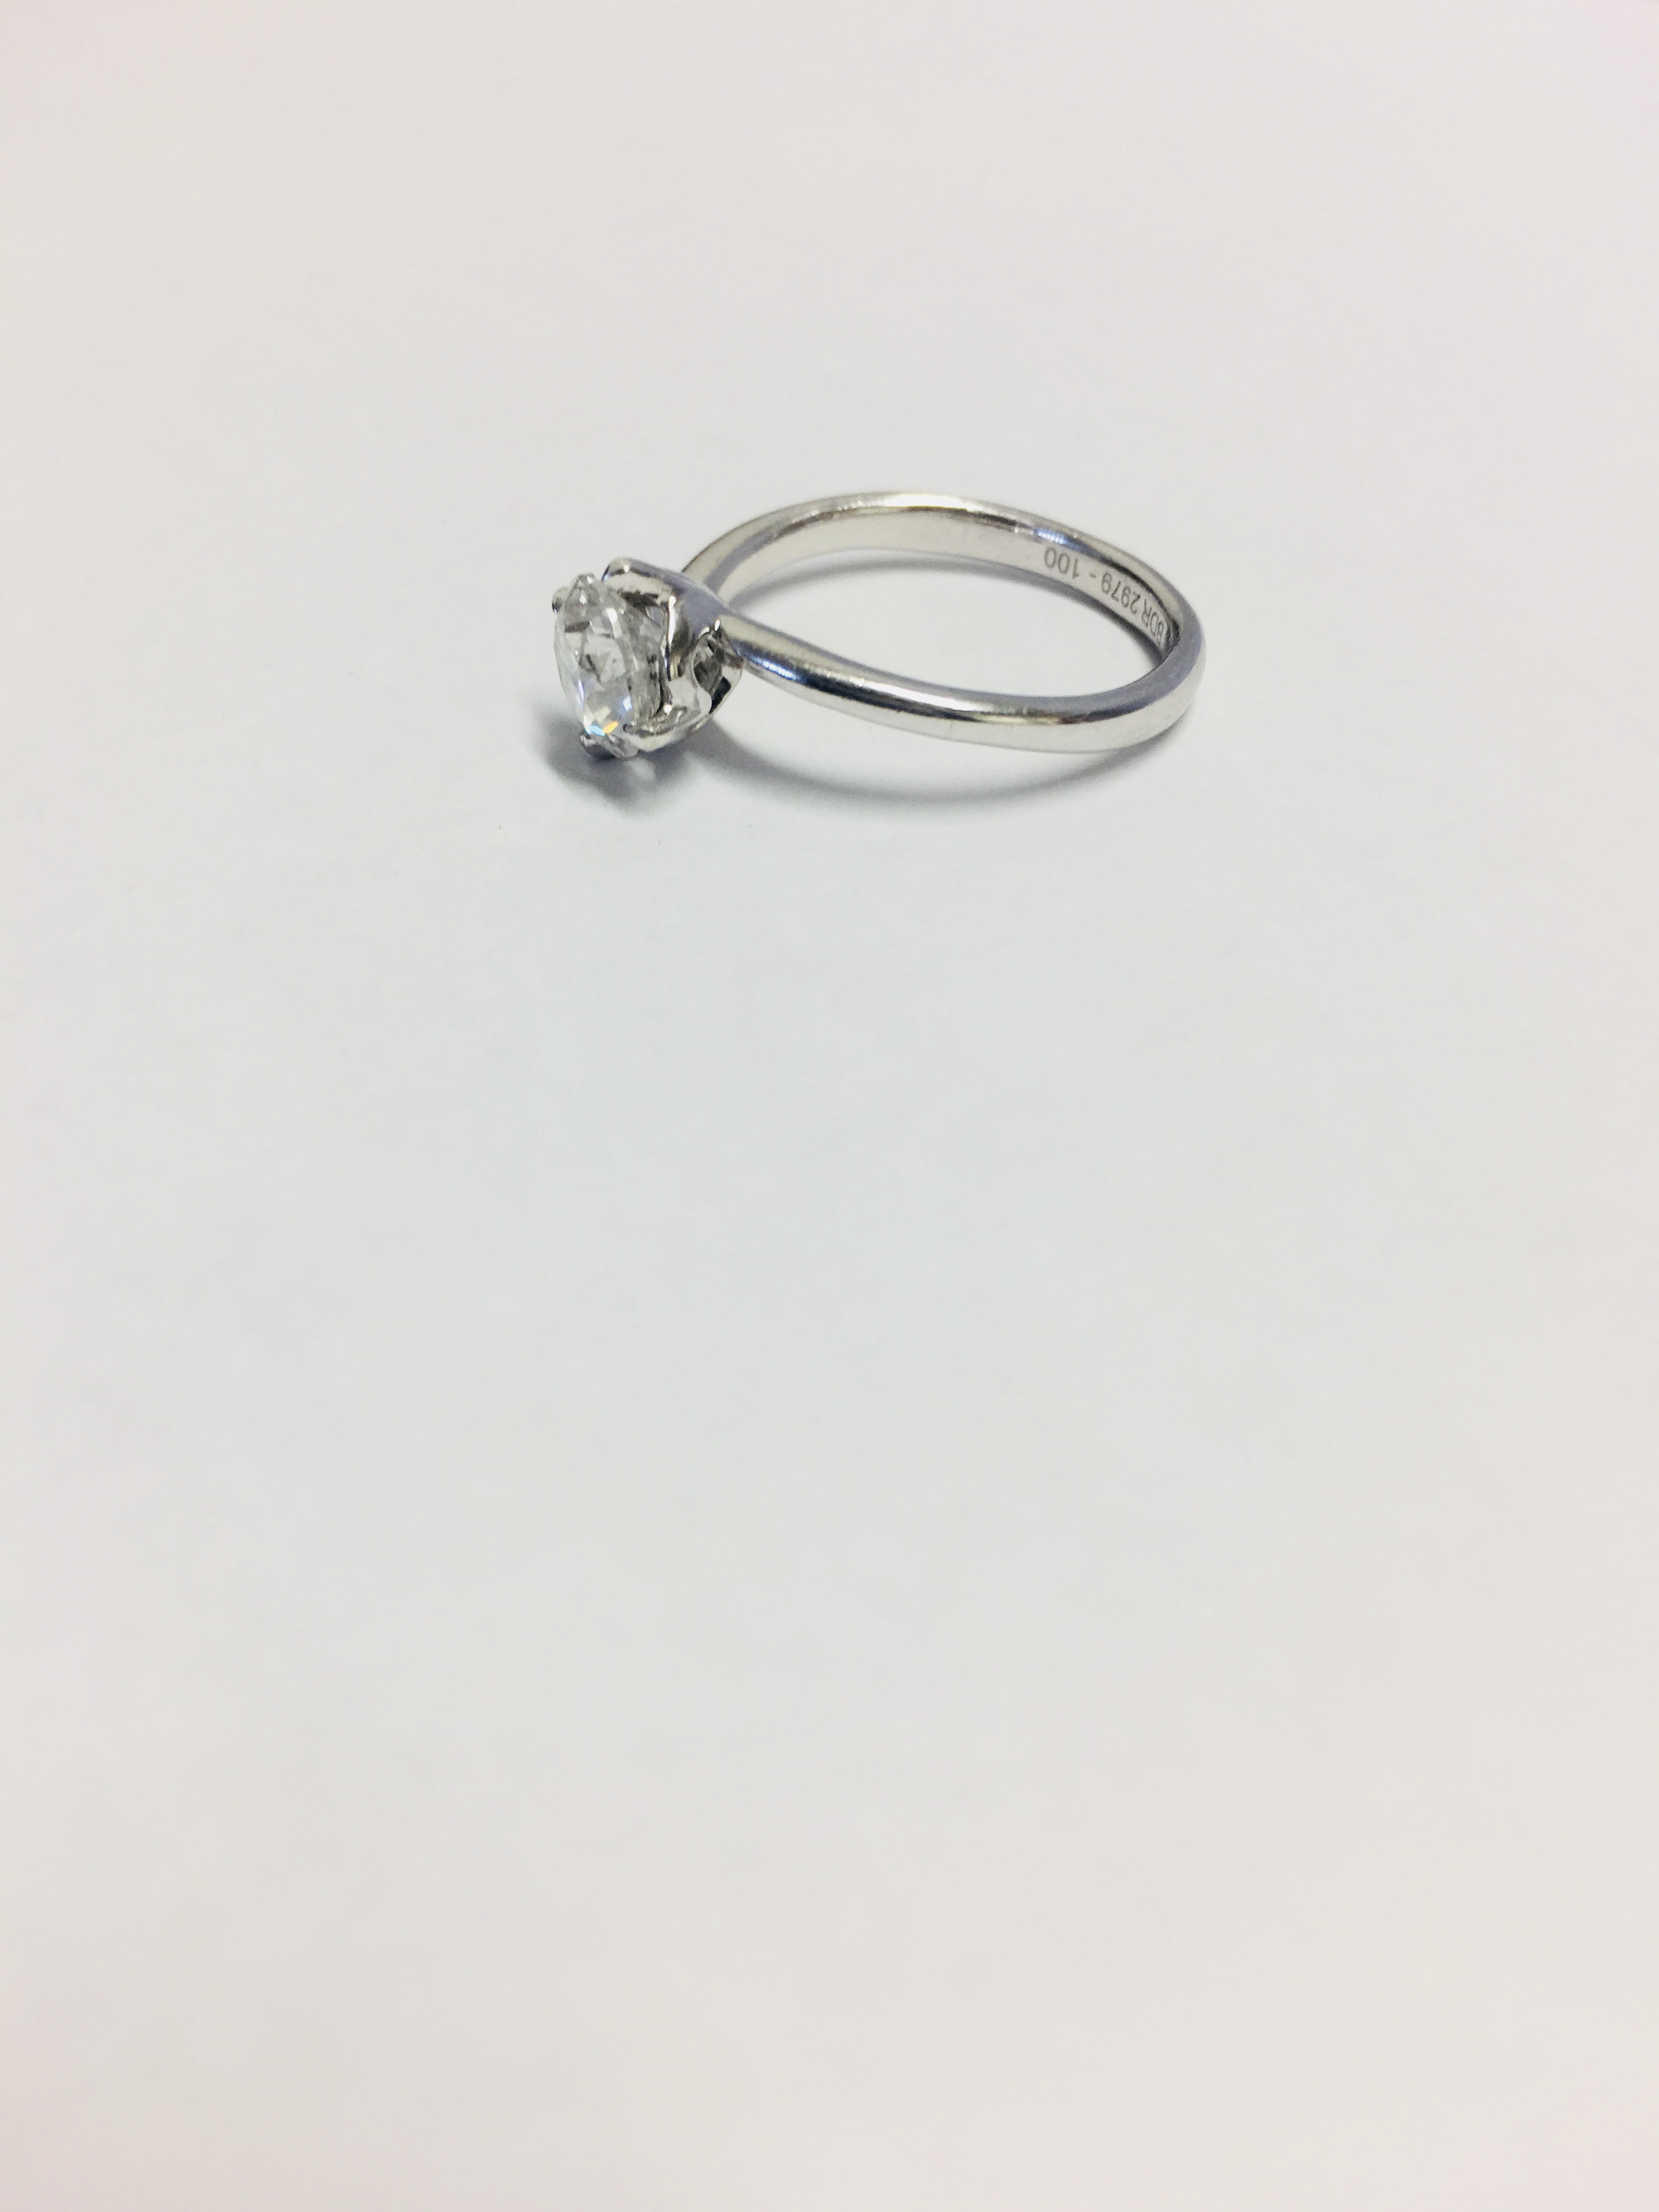 1Ct Brilliant Cut Diamond Solitaire Ring, - Image 2 of 6